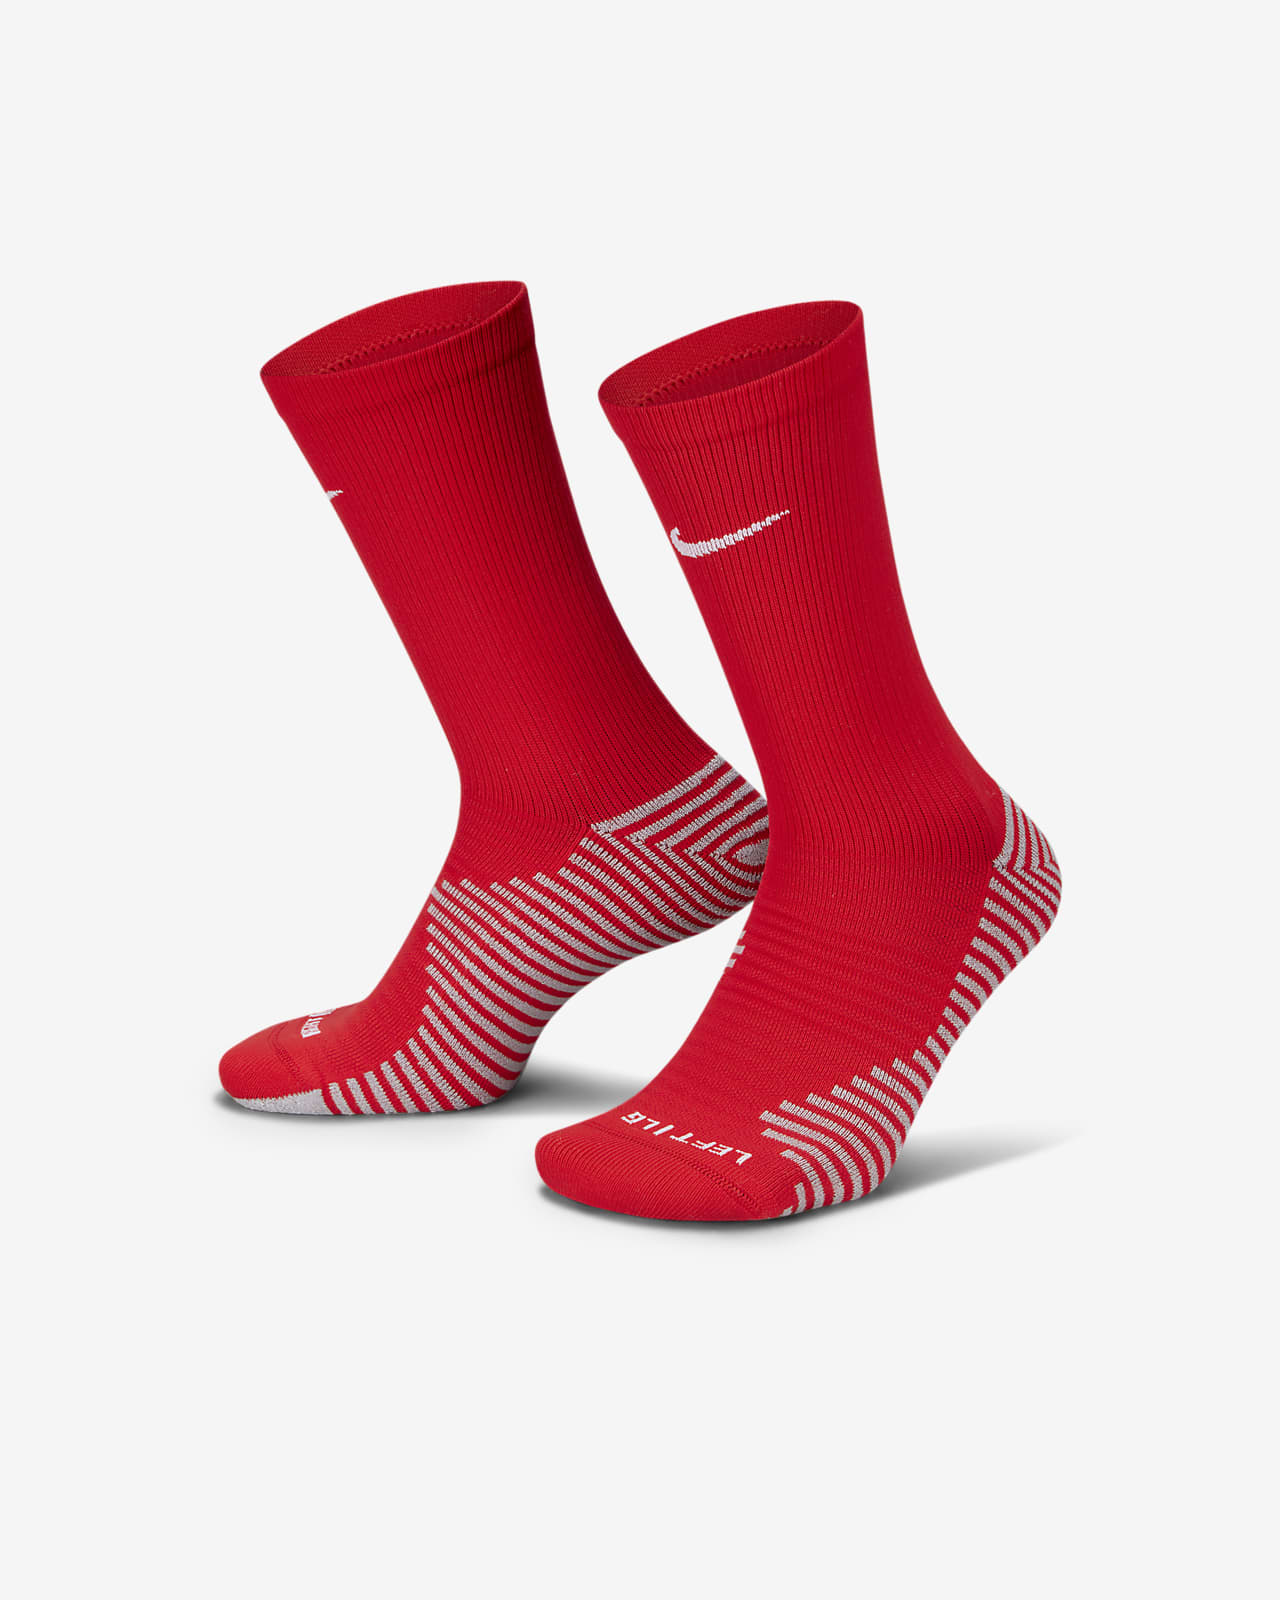 Football Socks Nike Grip Strike